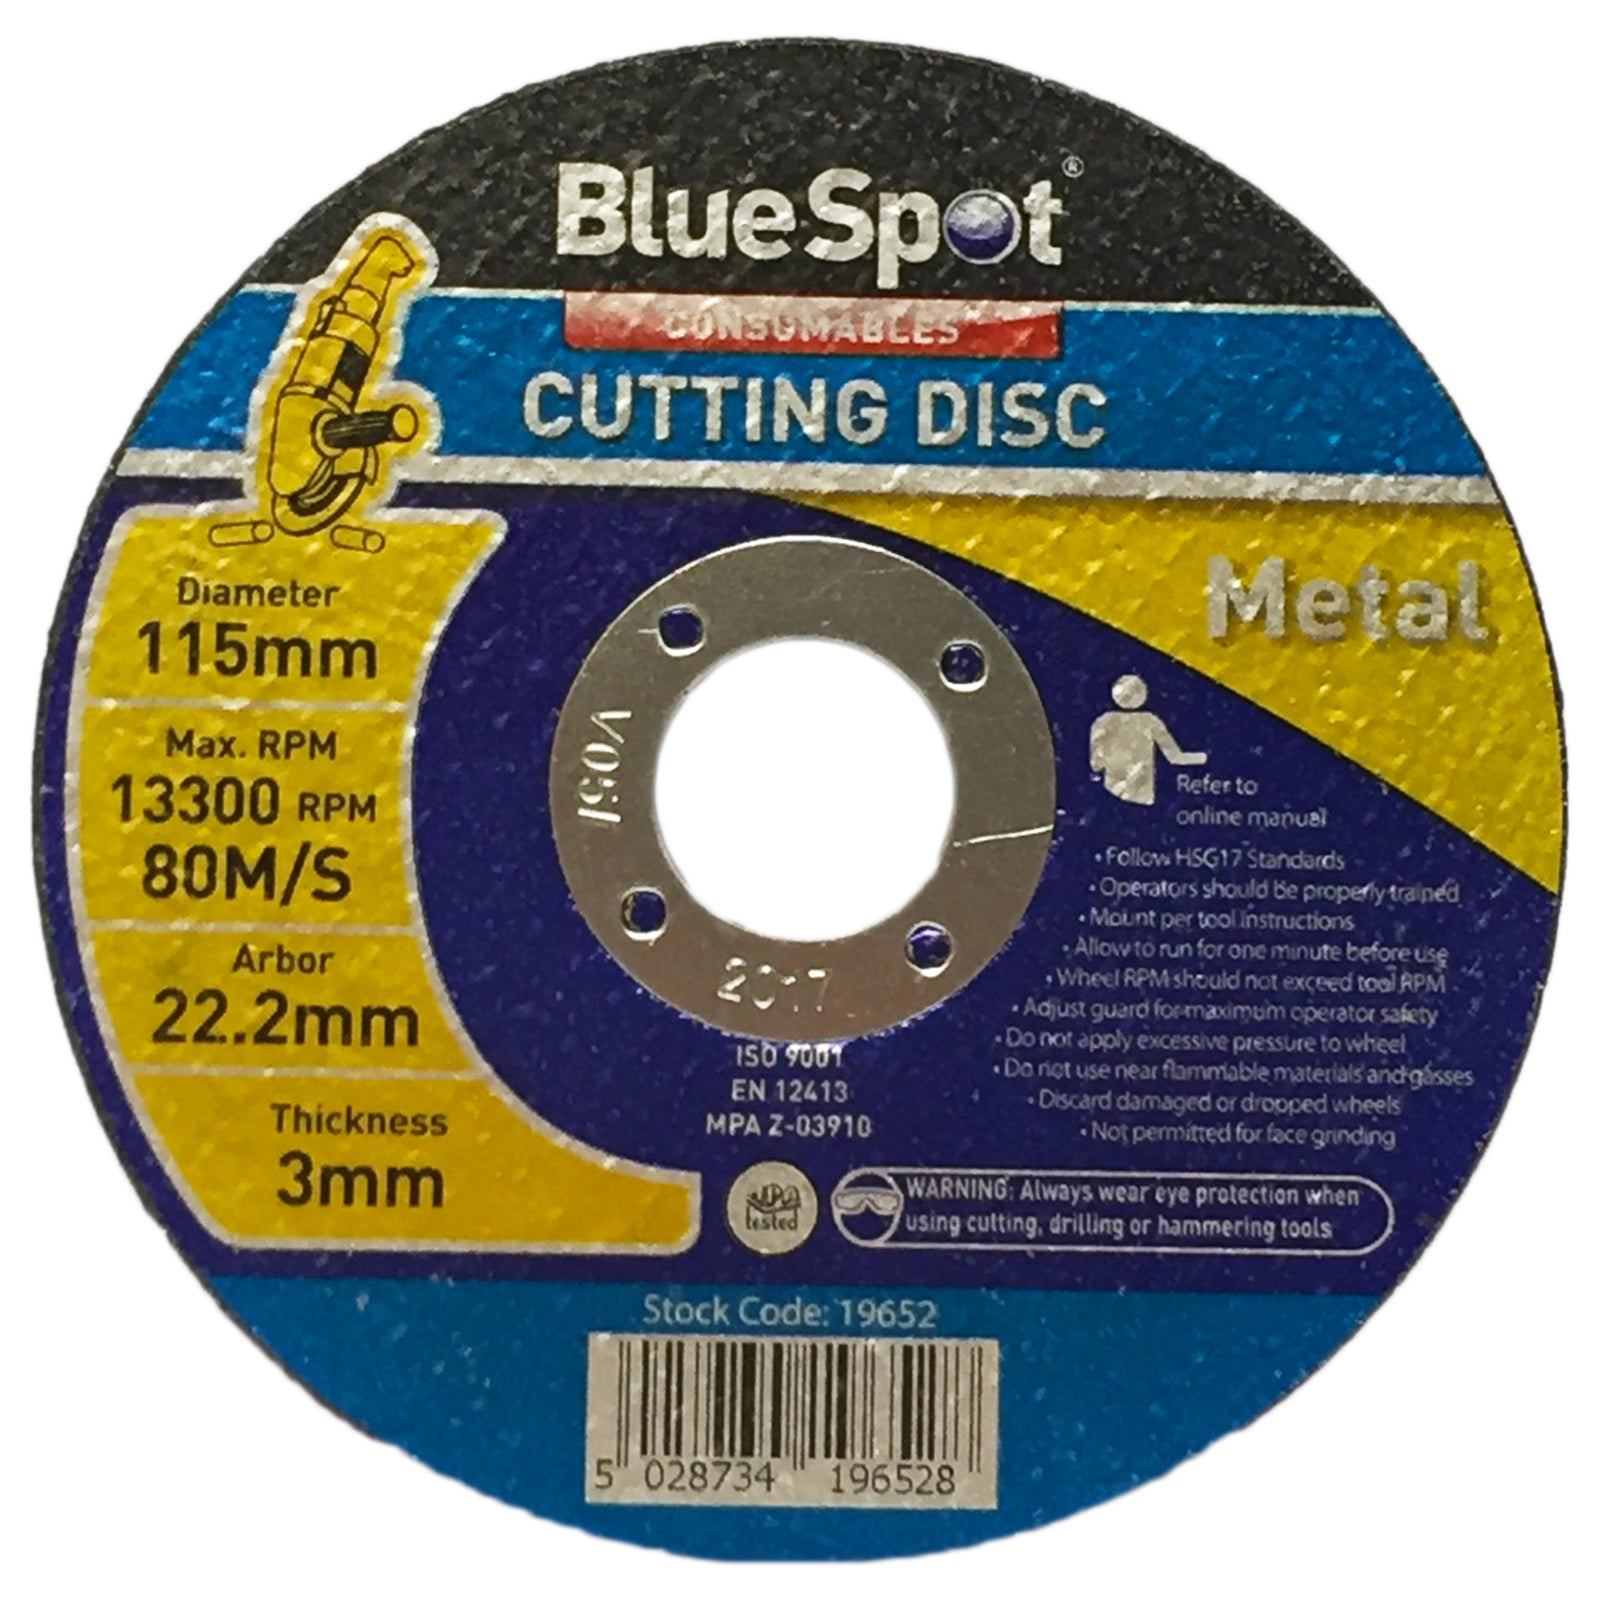 BlueSpot 115mm Metal Cutting Disc 3mm Thickness